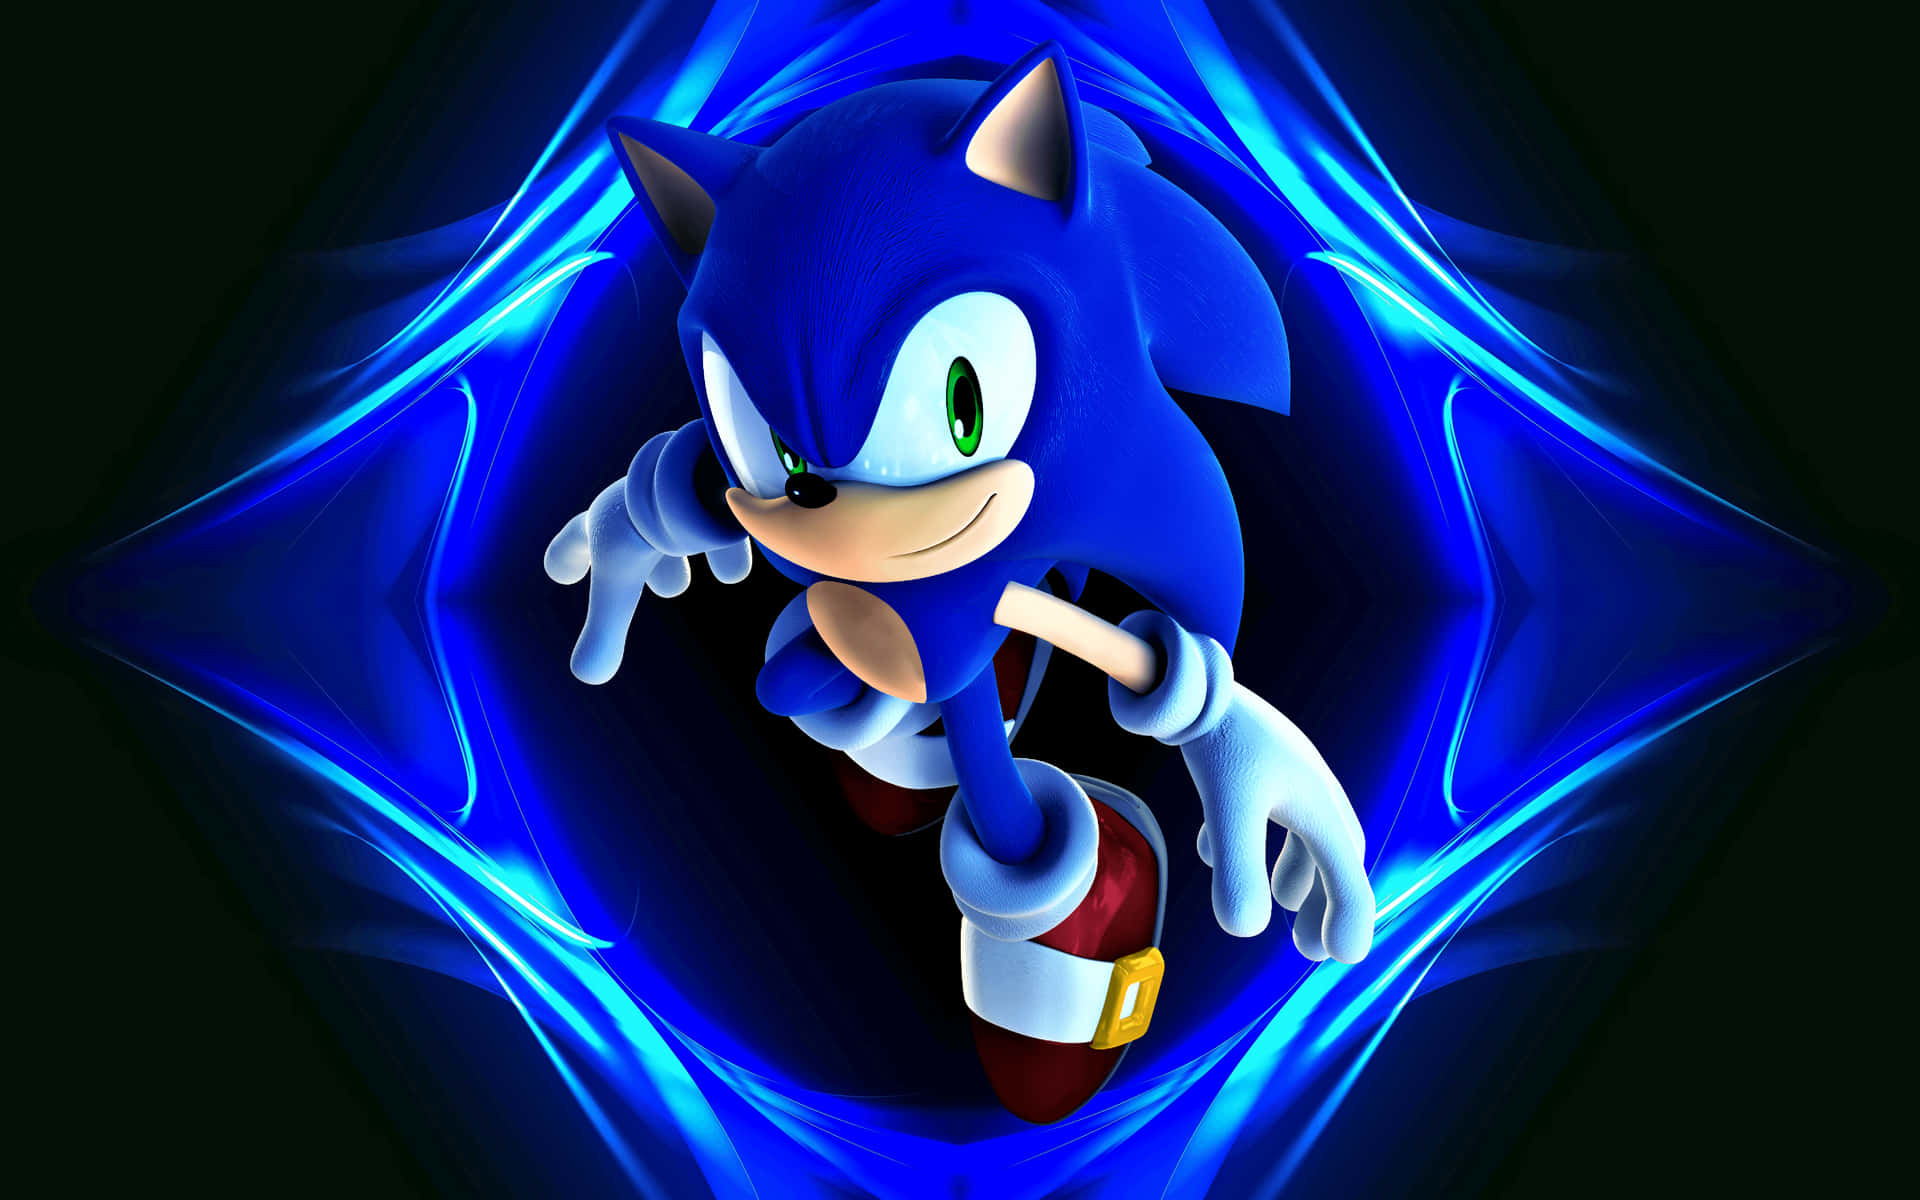 Sonic The Hedgehog in 4k Wallpaper